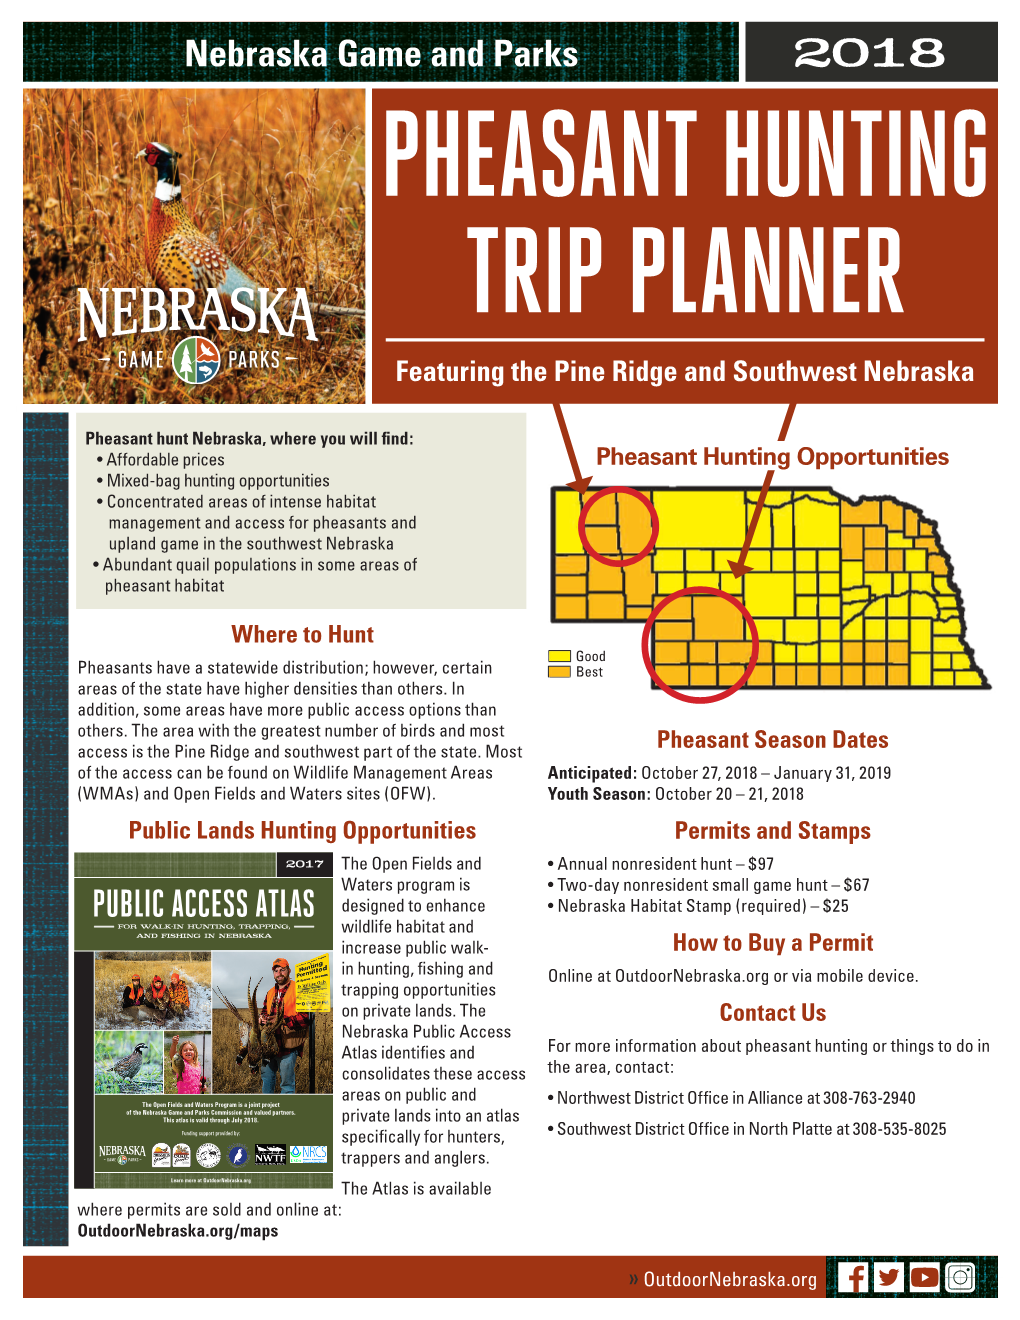 PHEASANT HUNTING TRIP PLANNER Featuring the Pine Ridge and Southwest Nebraska